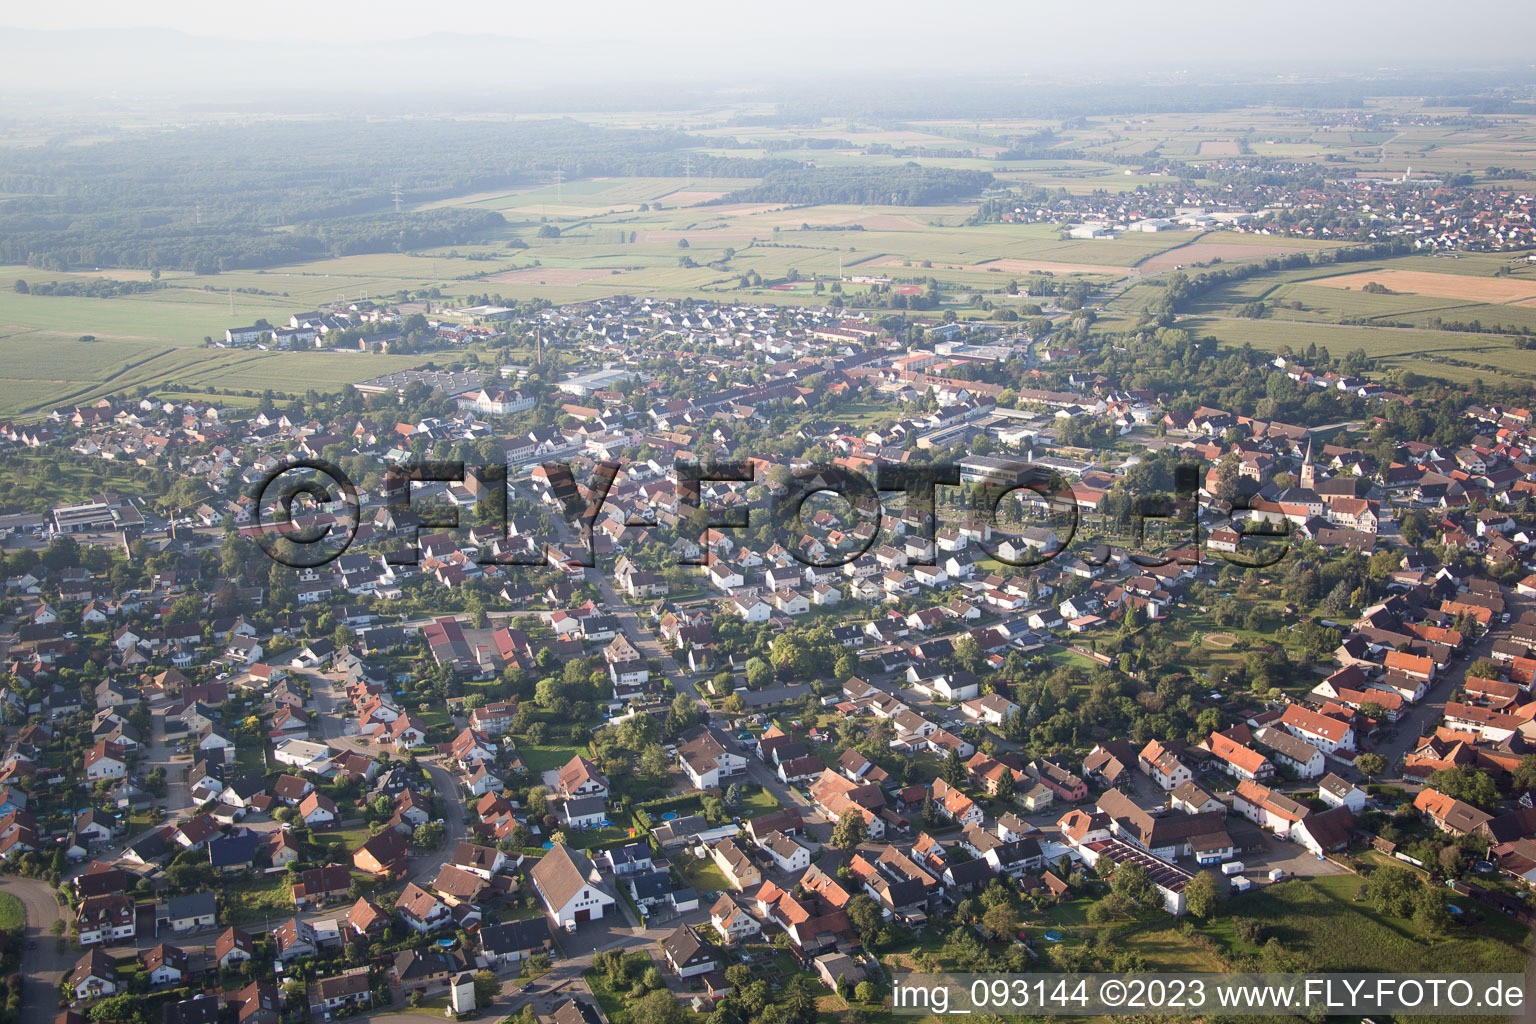 Drone recording of District Freistett in Rheinau in the state Baden-Wuerttemberg, Germany